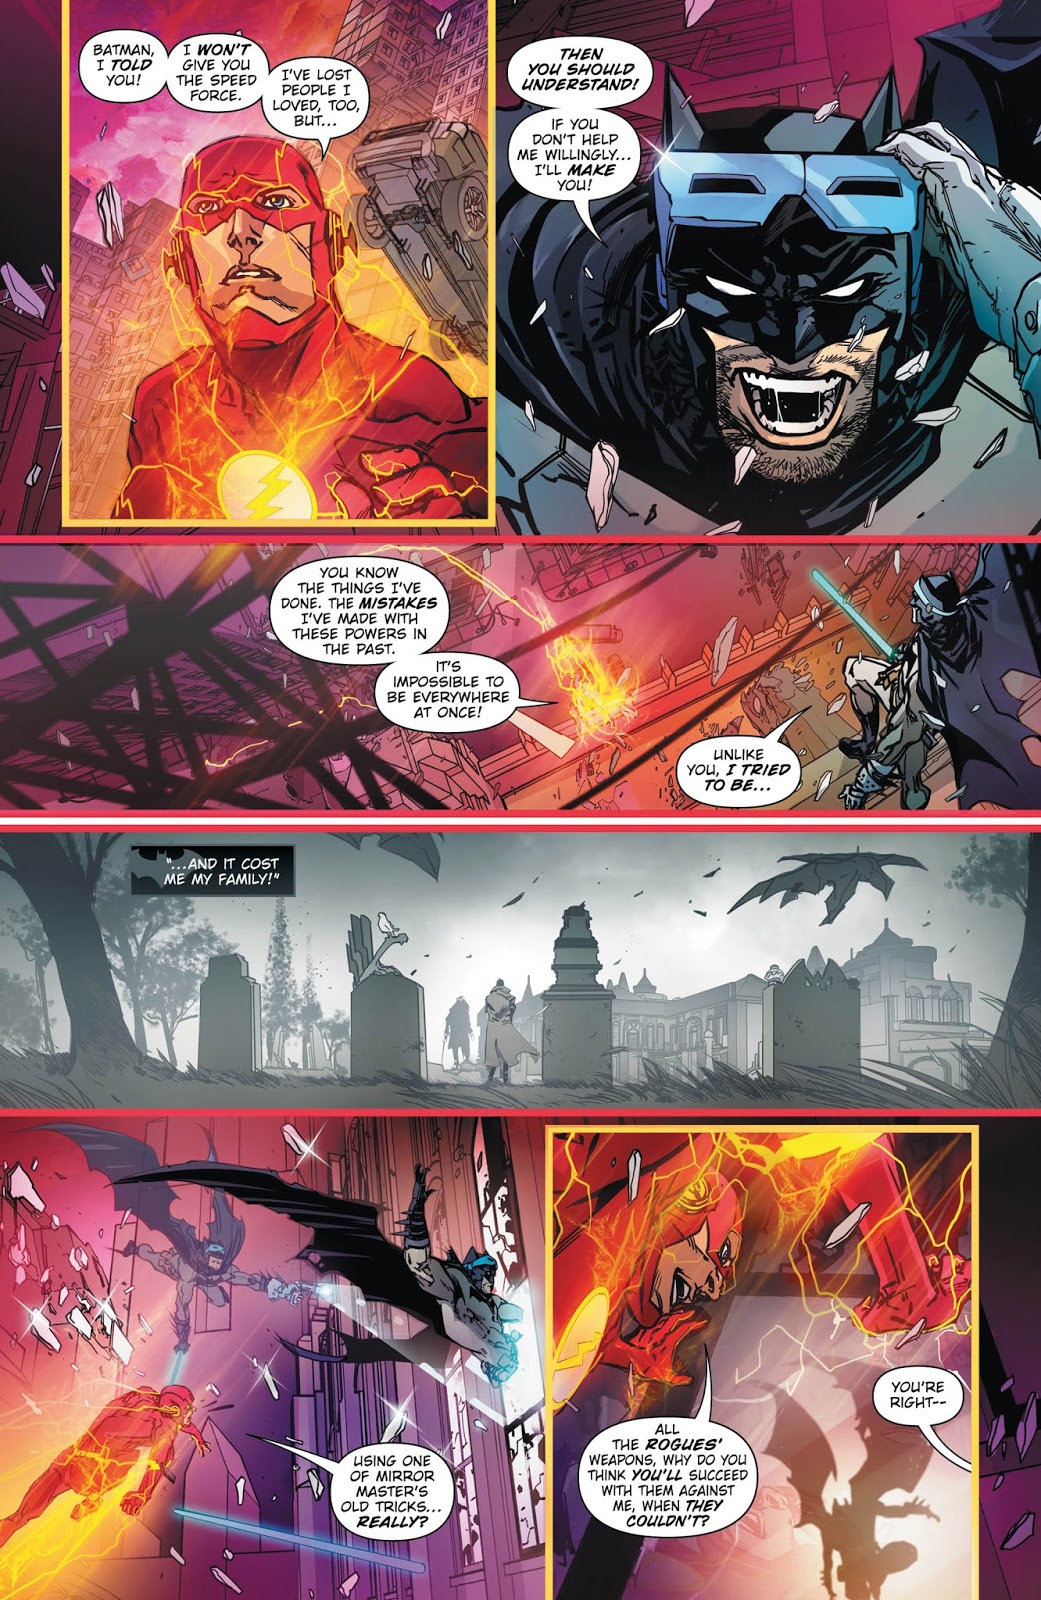 Weird Science DC Comics: Batman - The Red Death #1 Review